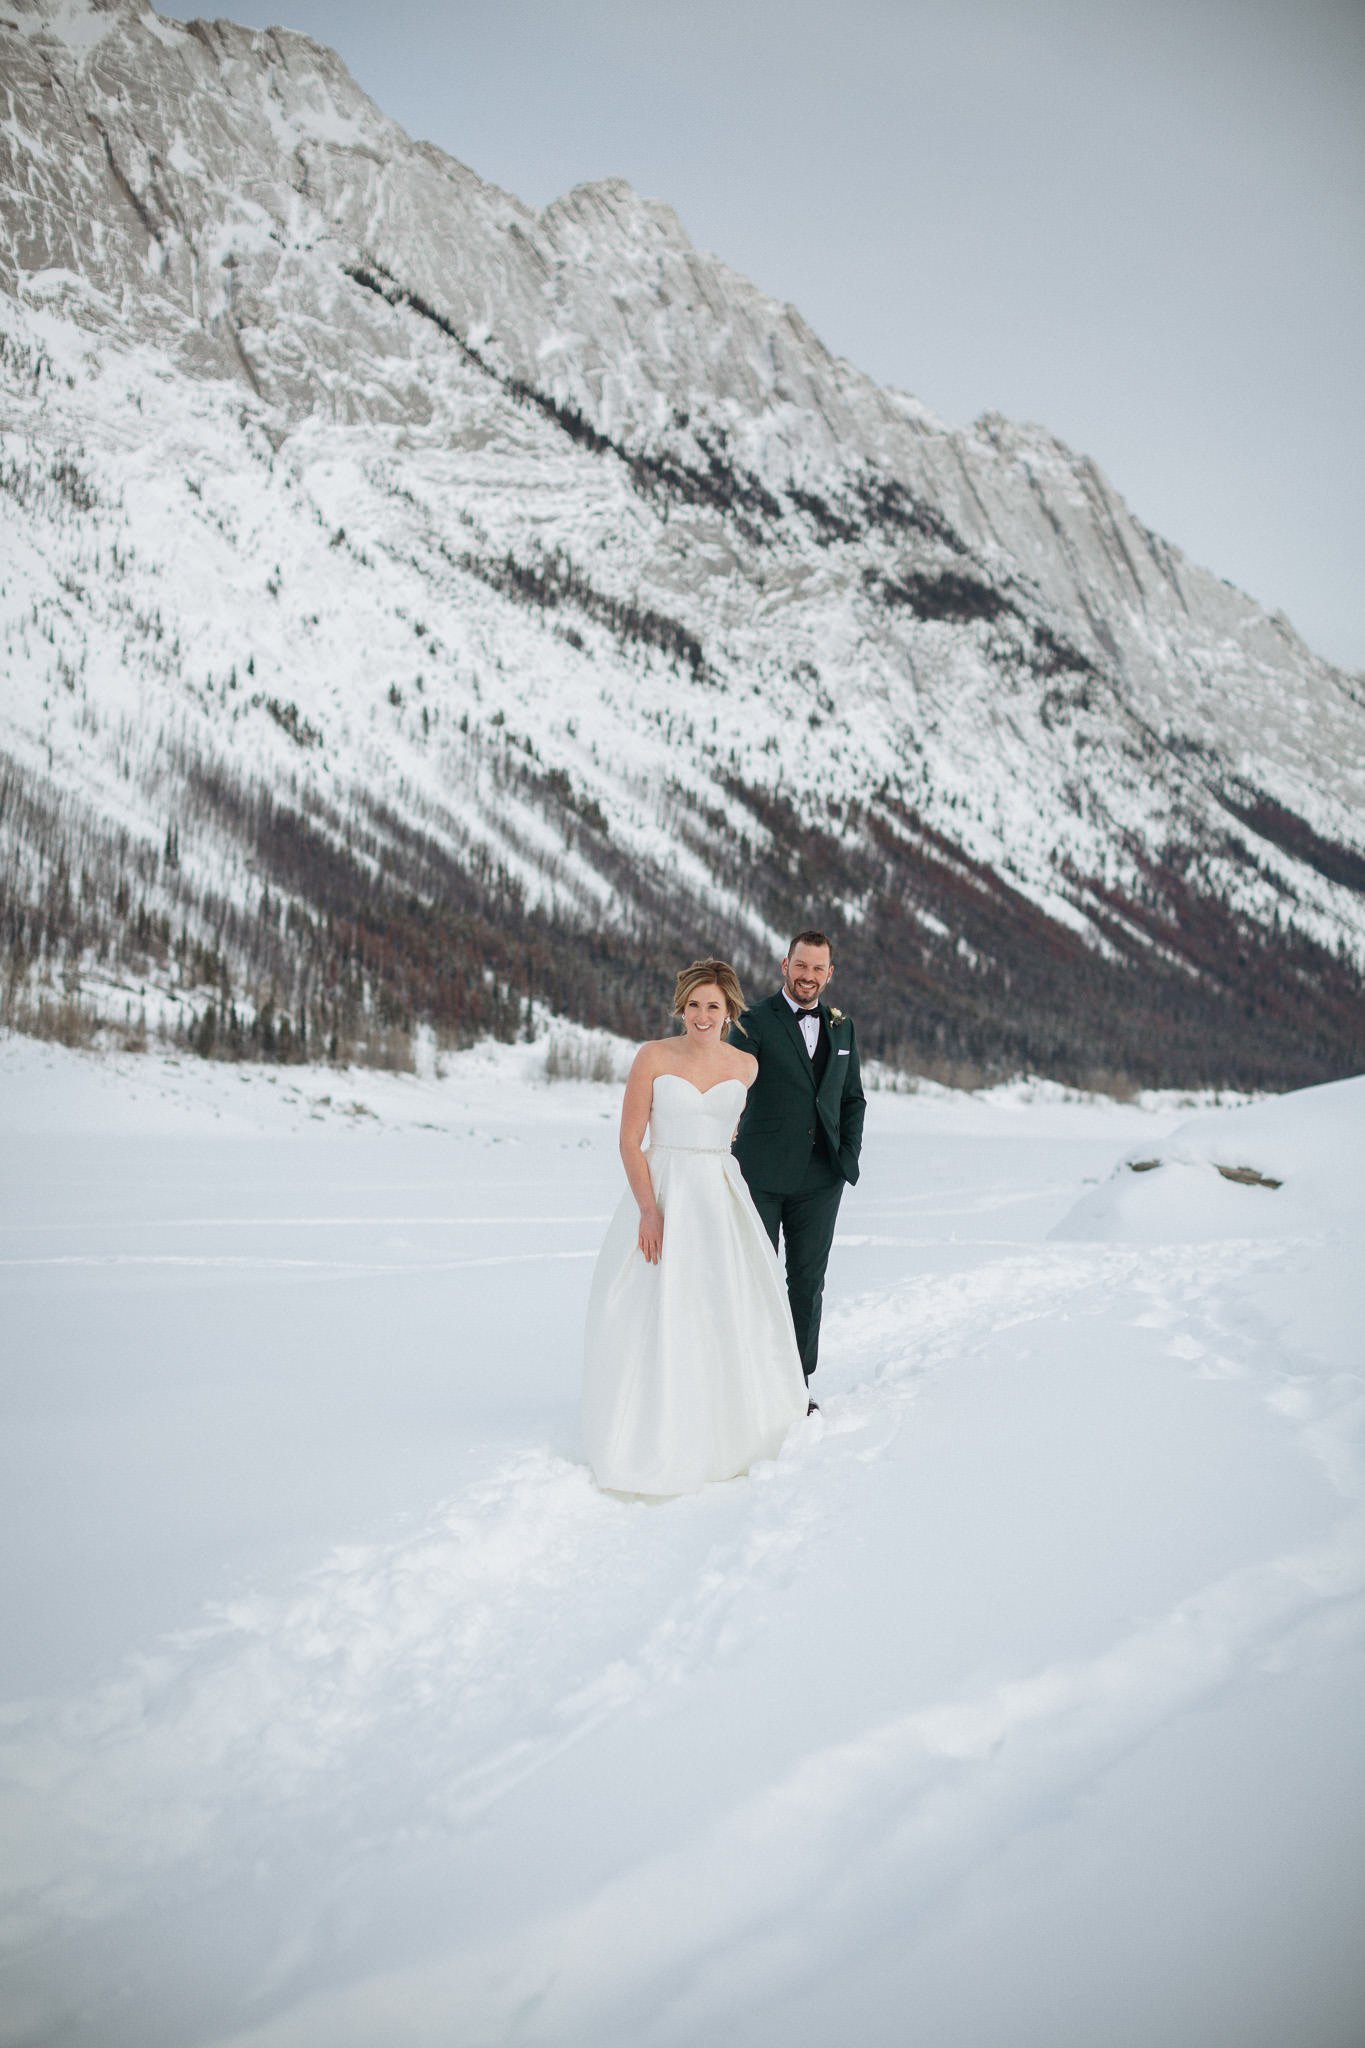 medicine-lake-winter-wedding-photo-009.jpg